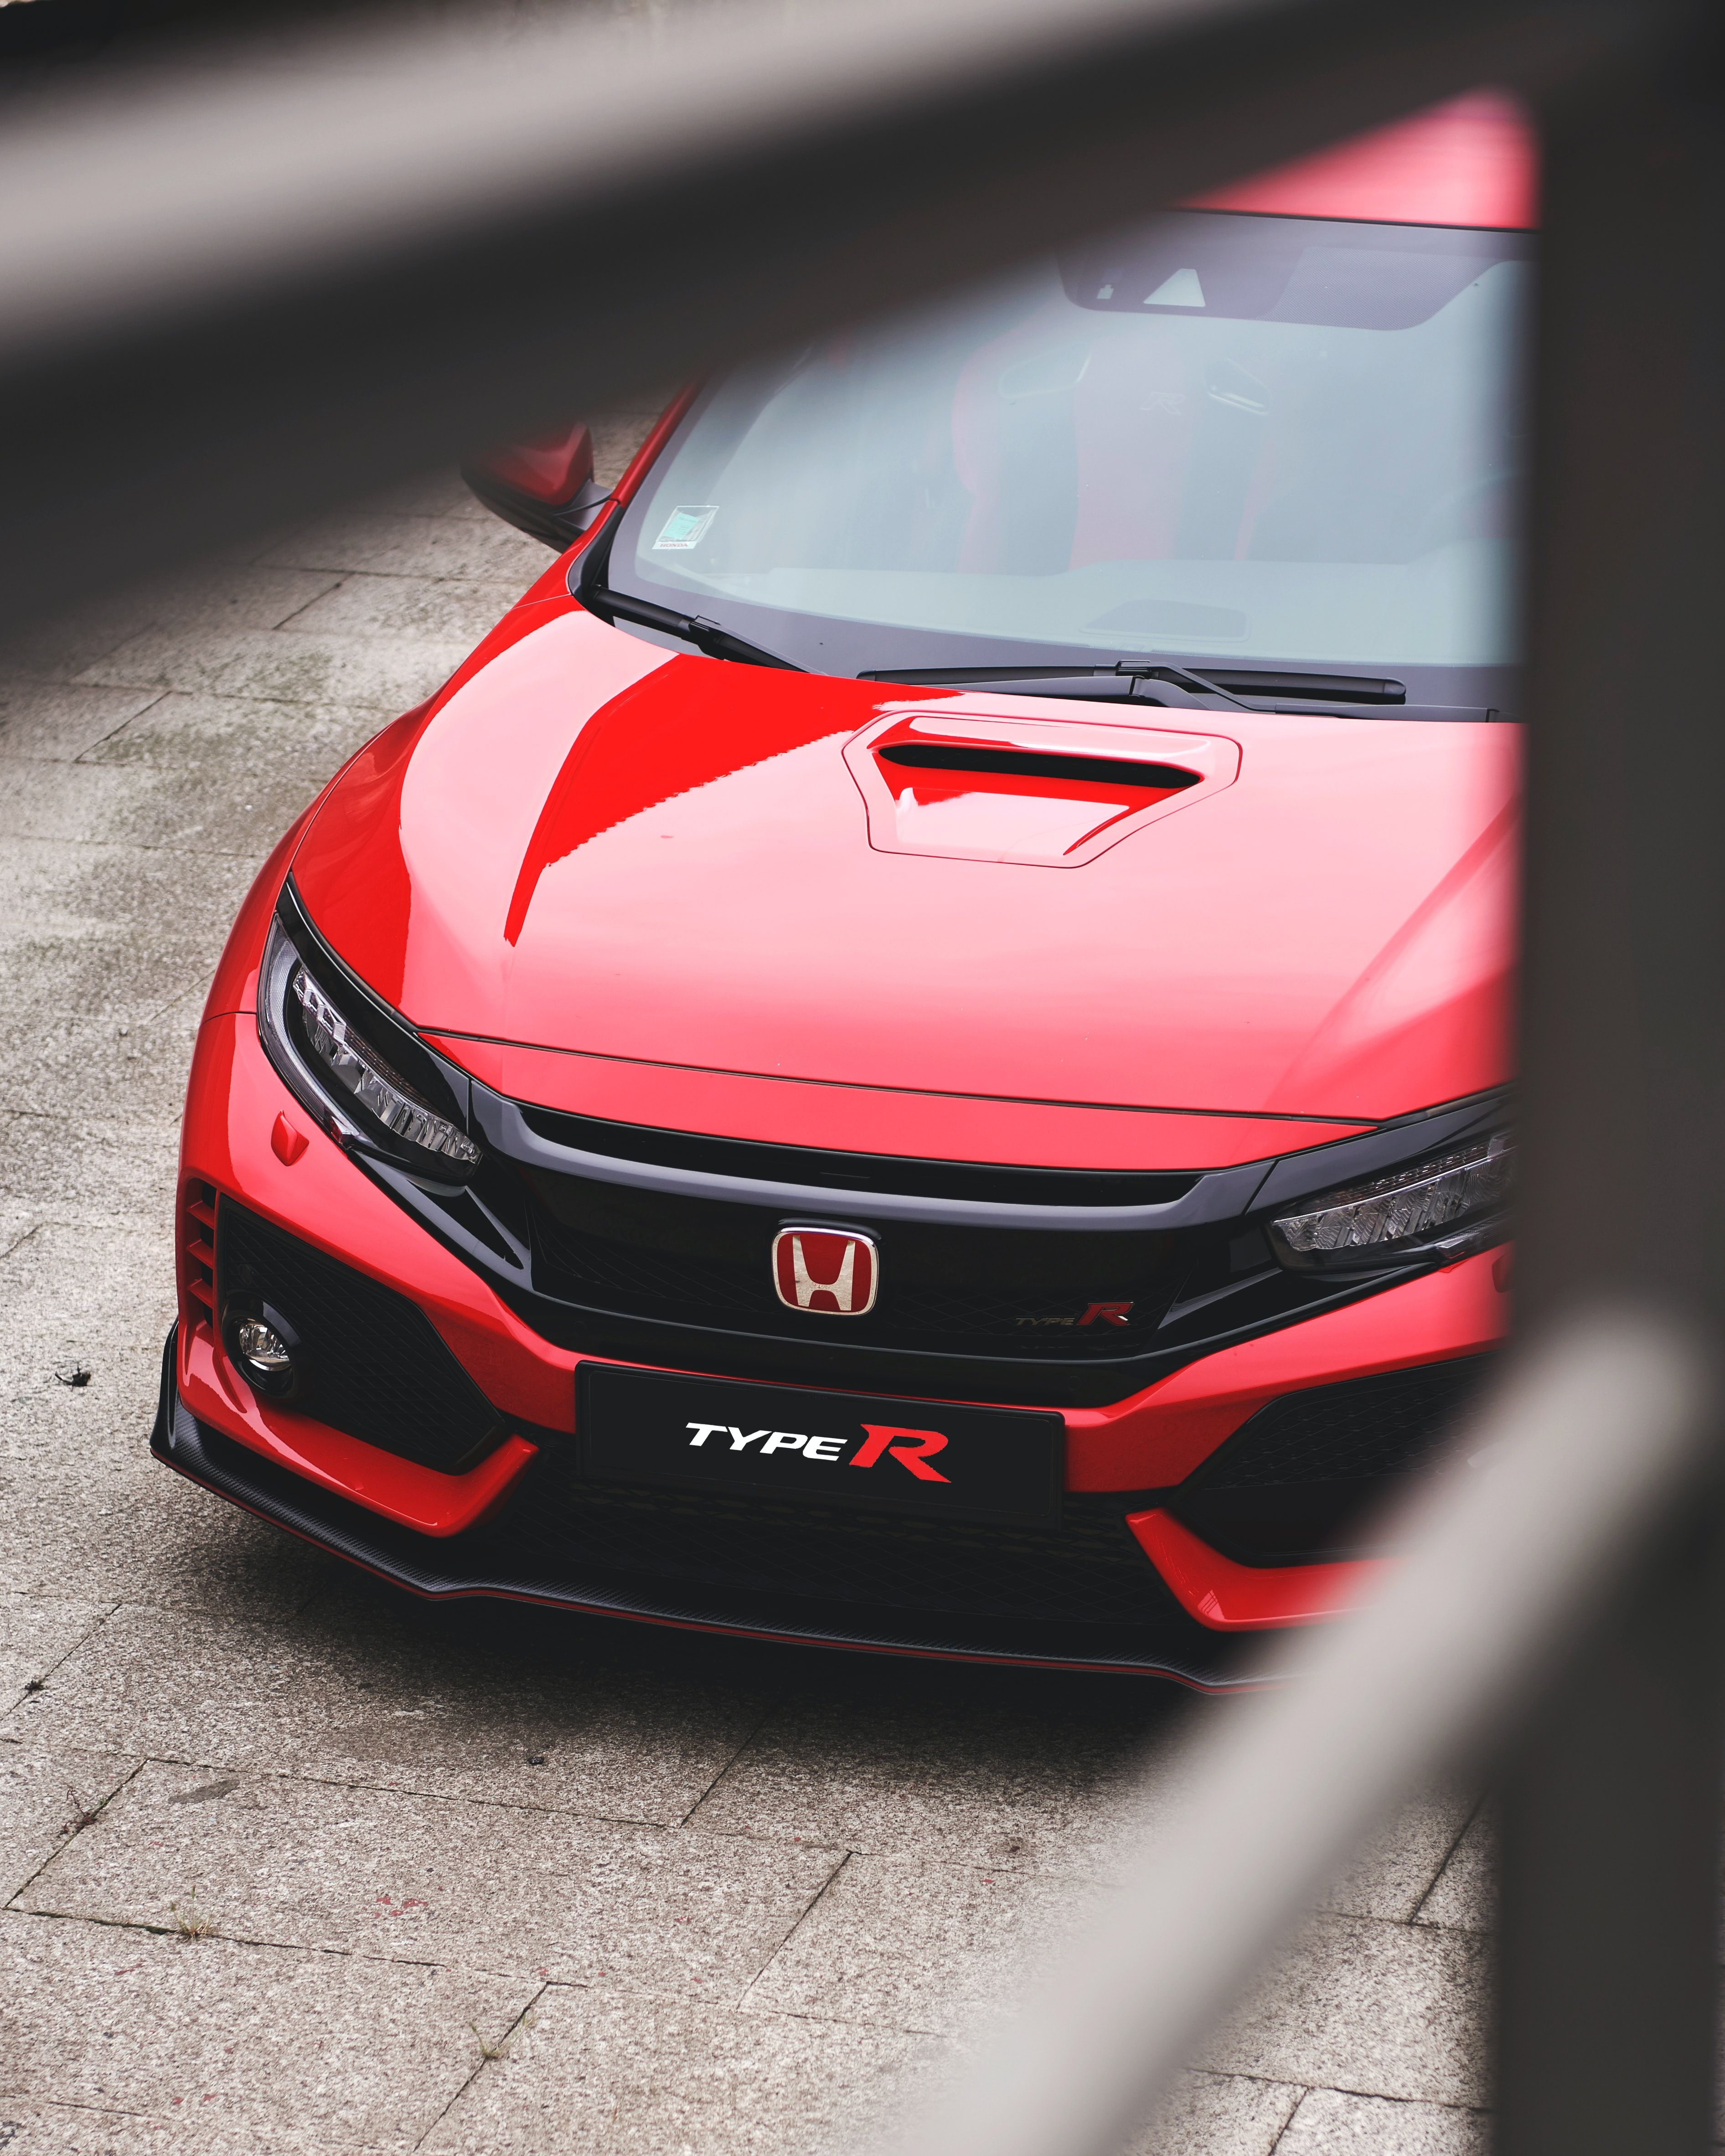 Honda Civic Picture [HD]. Download Free Image